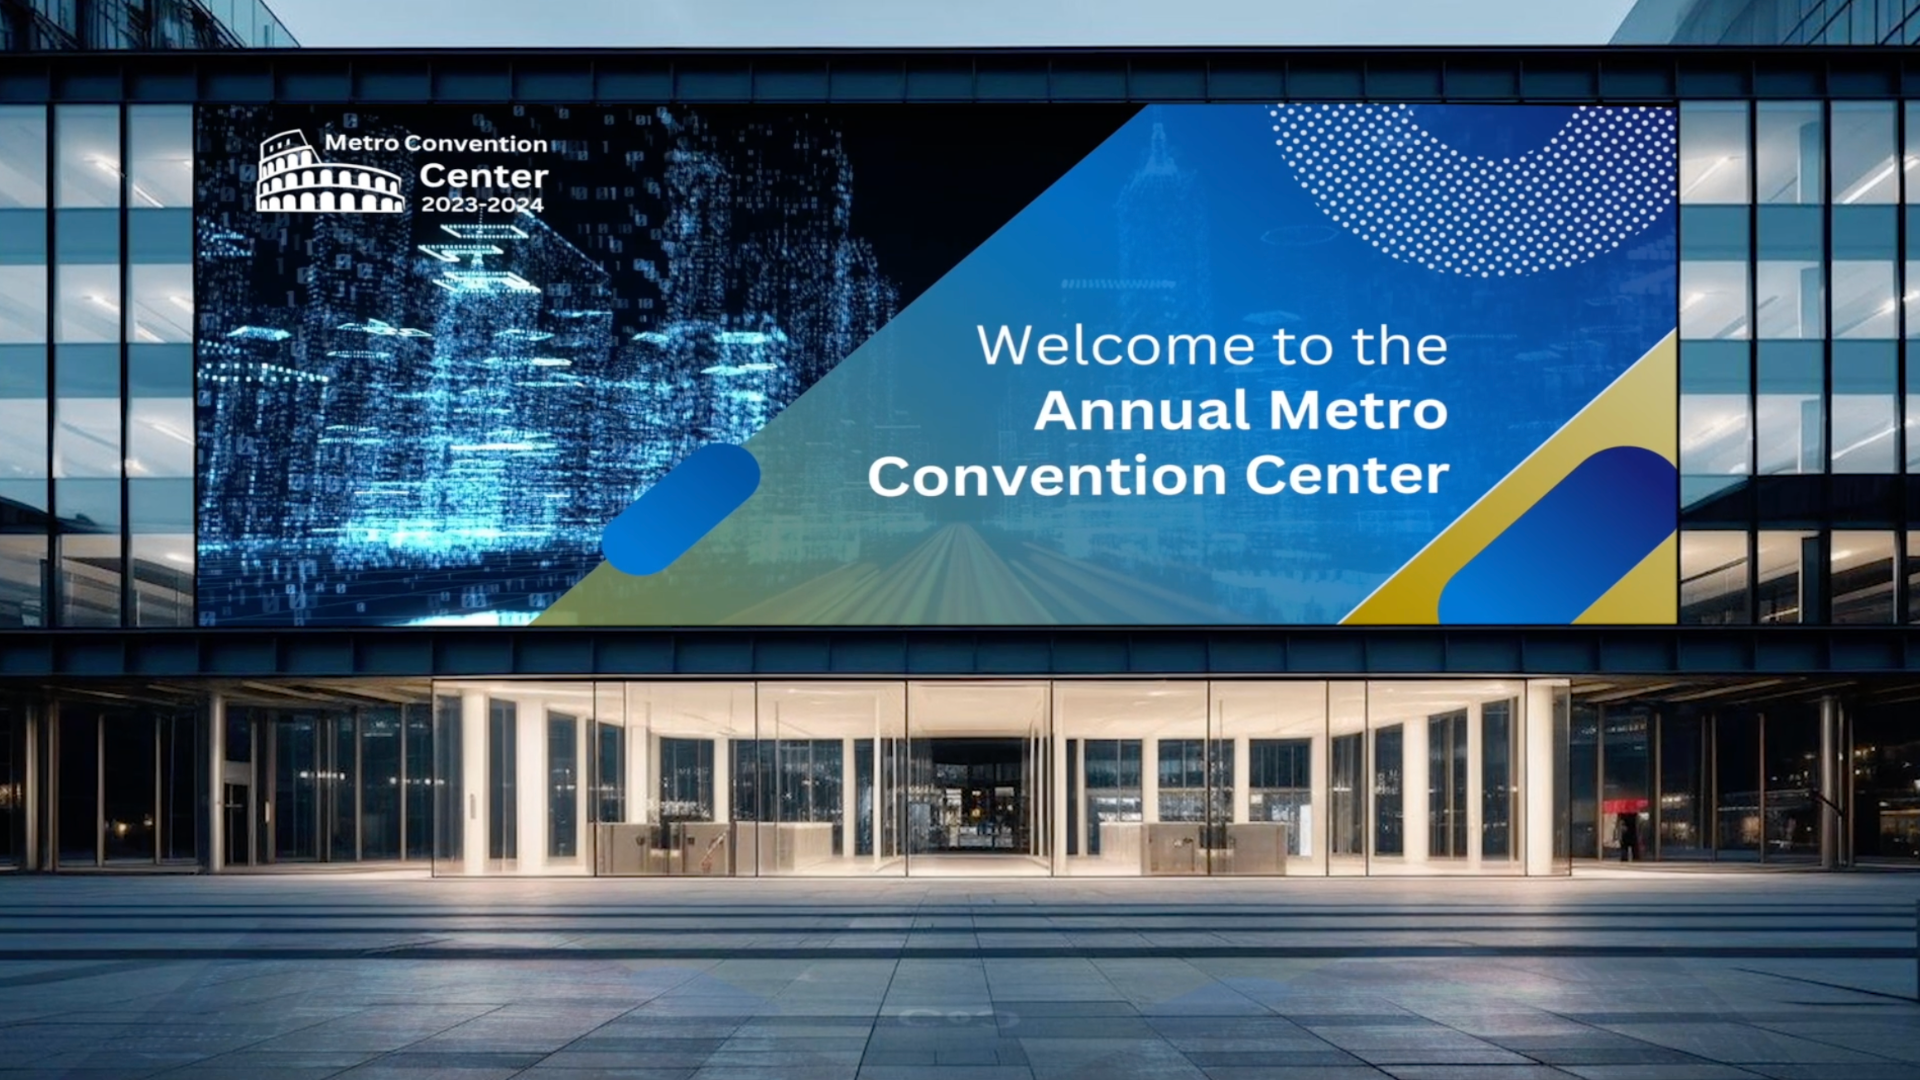 Convention center digital signage